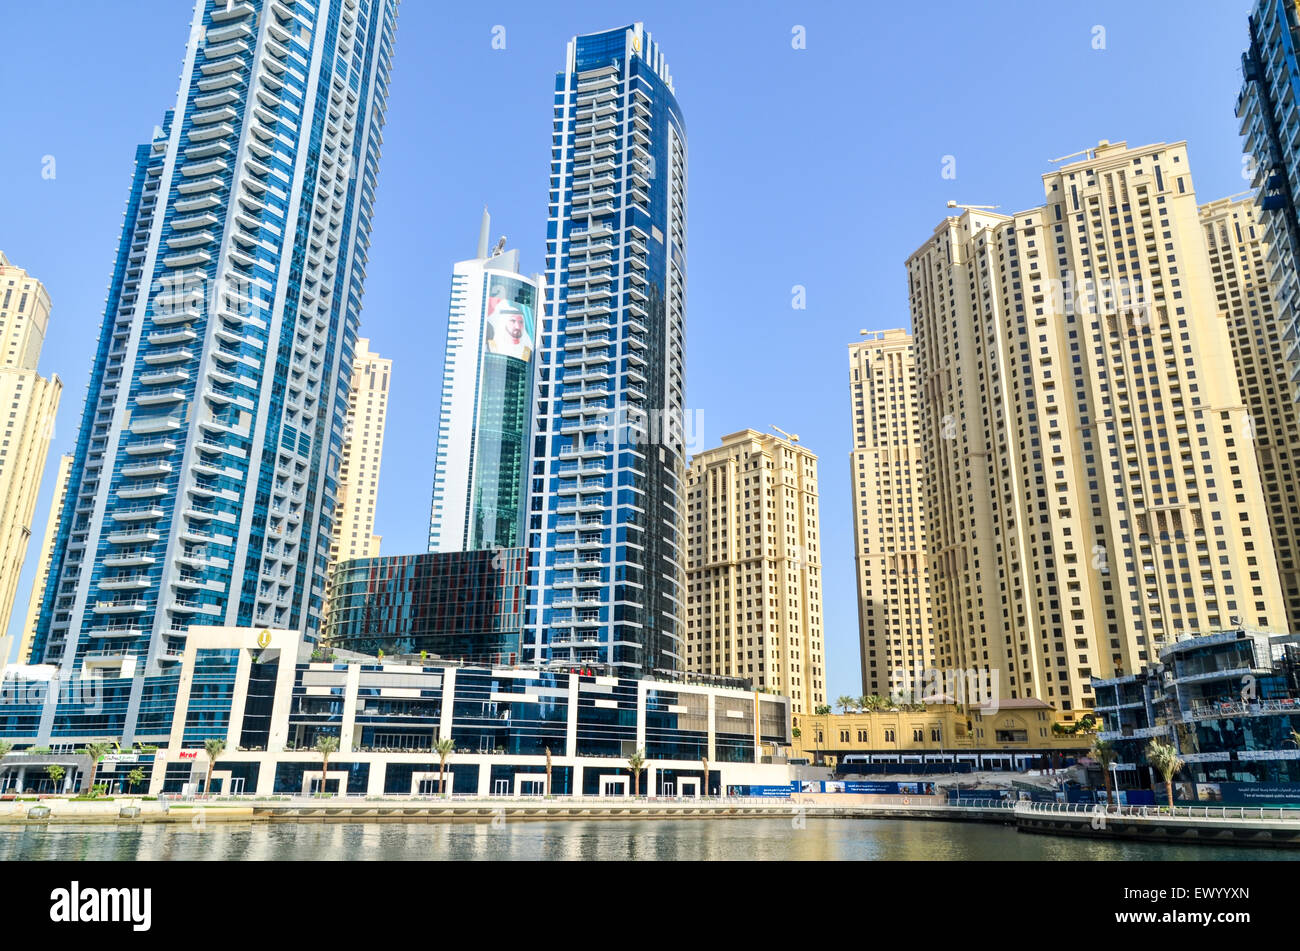 Face of Mohammed bin Rashid Al Maktoum, Emir of Dubai, among high rise buildings of the Dubai Marina, UAE Stock Photo